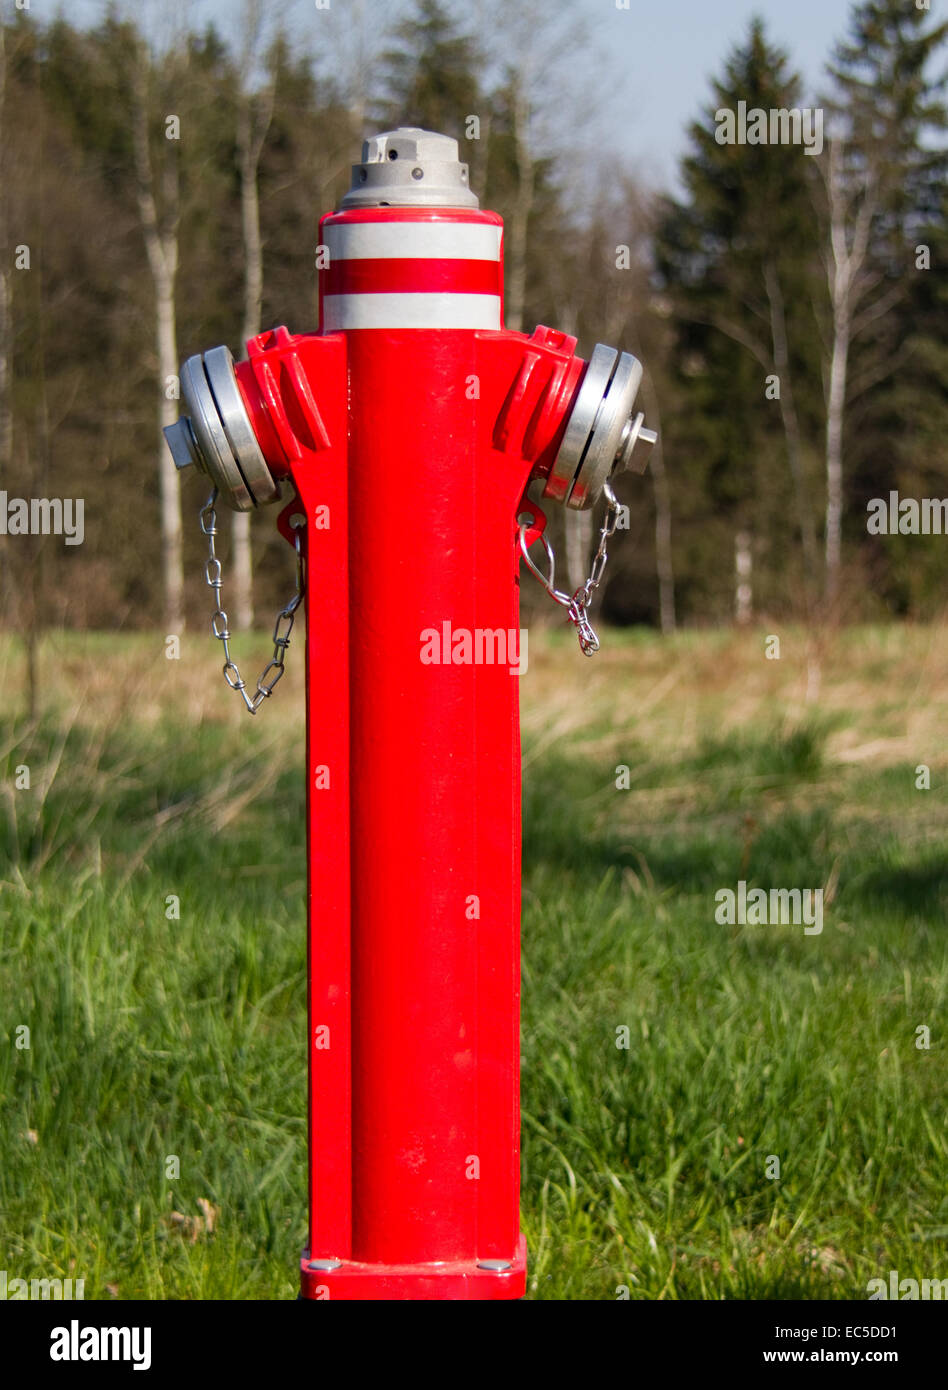 hydrant in meadow Stock Photo - Alamy